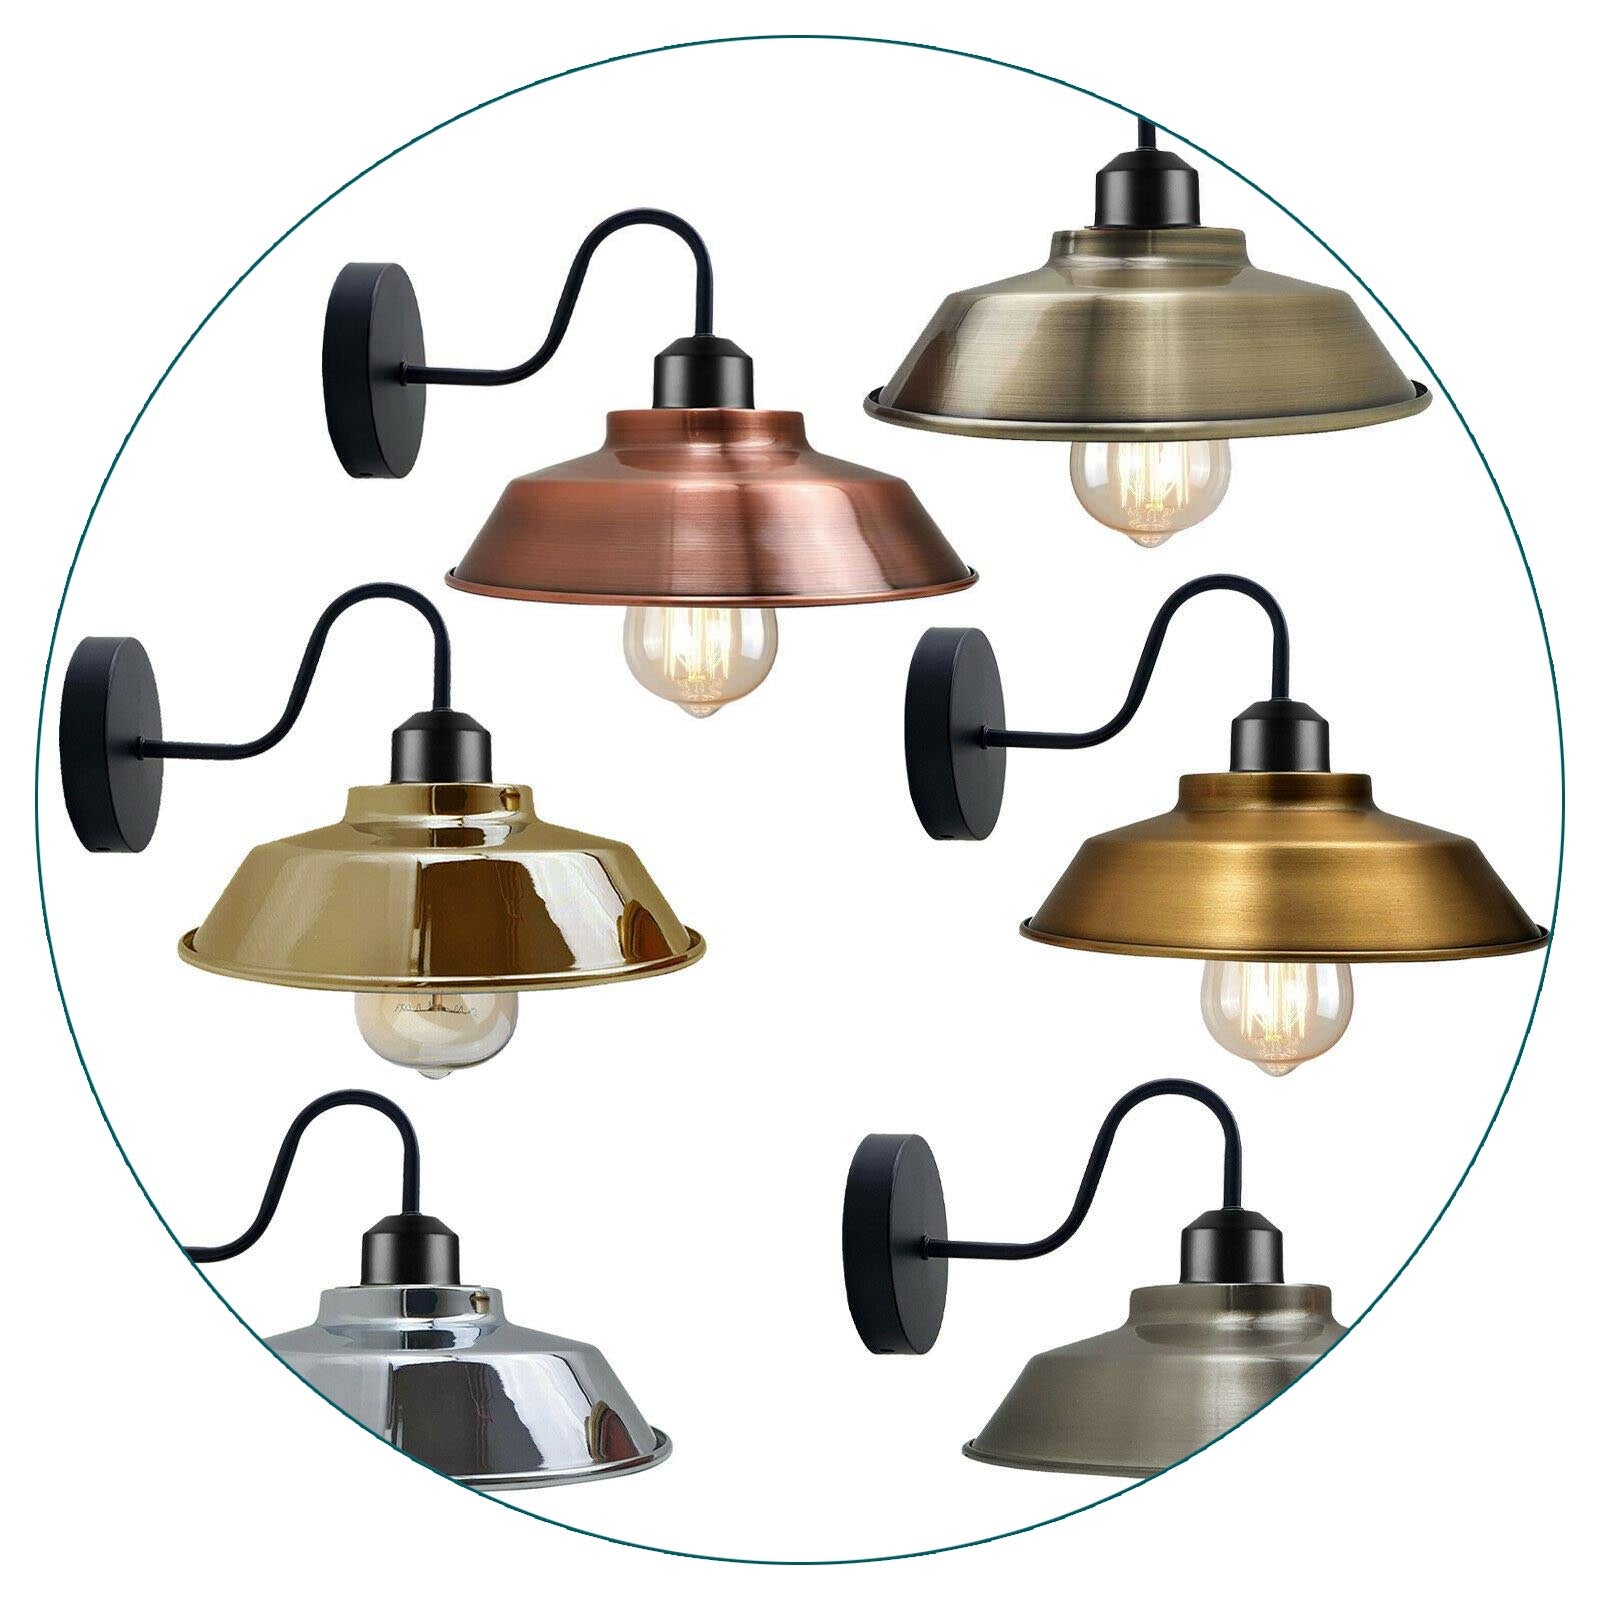 Retro Industrial Wall Lights Fittings E27 Indoor Sconce Metal Bowl Shape Shade For Basement, Bedroom, Home Office~1186 - LEDSone UK Ltd